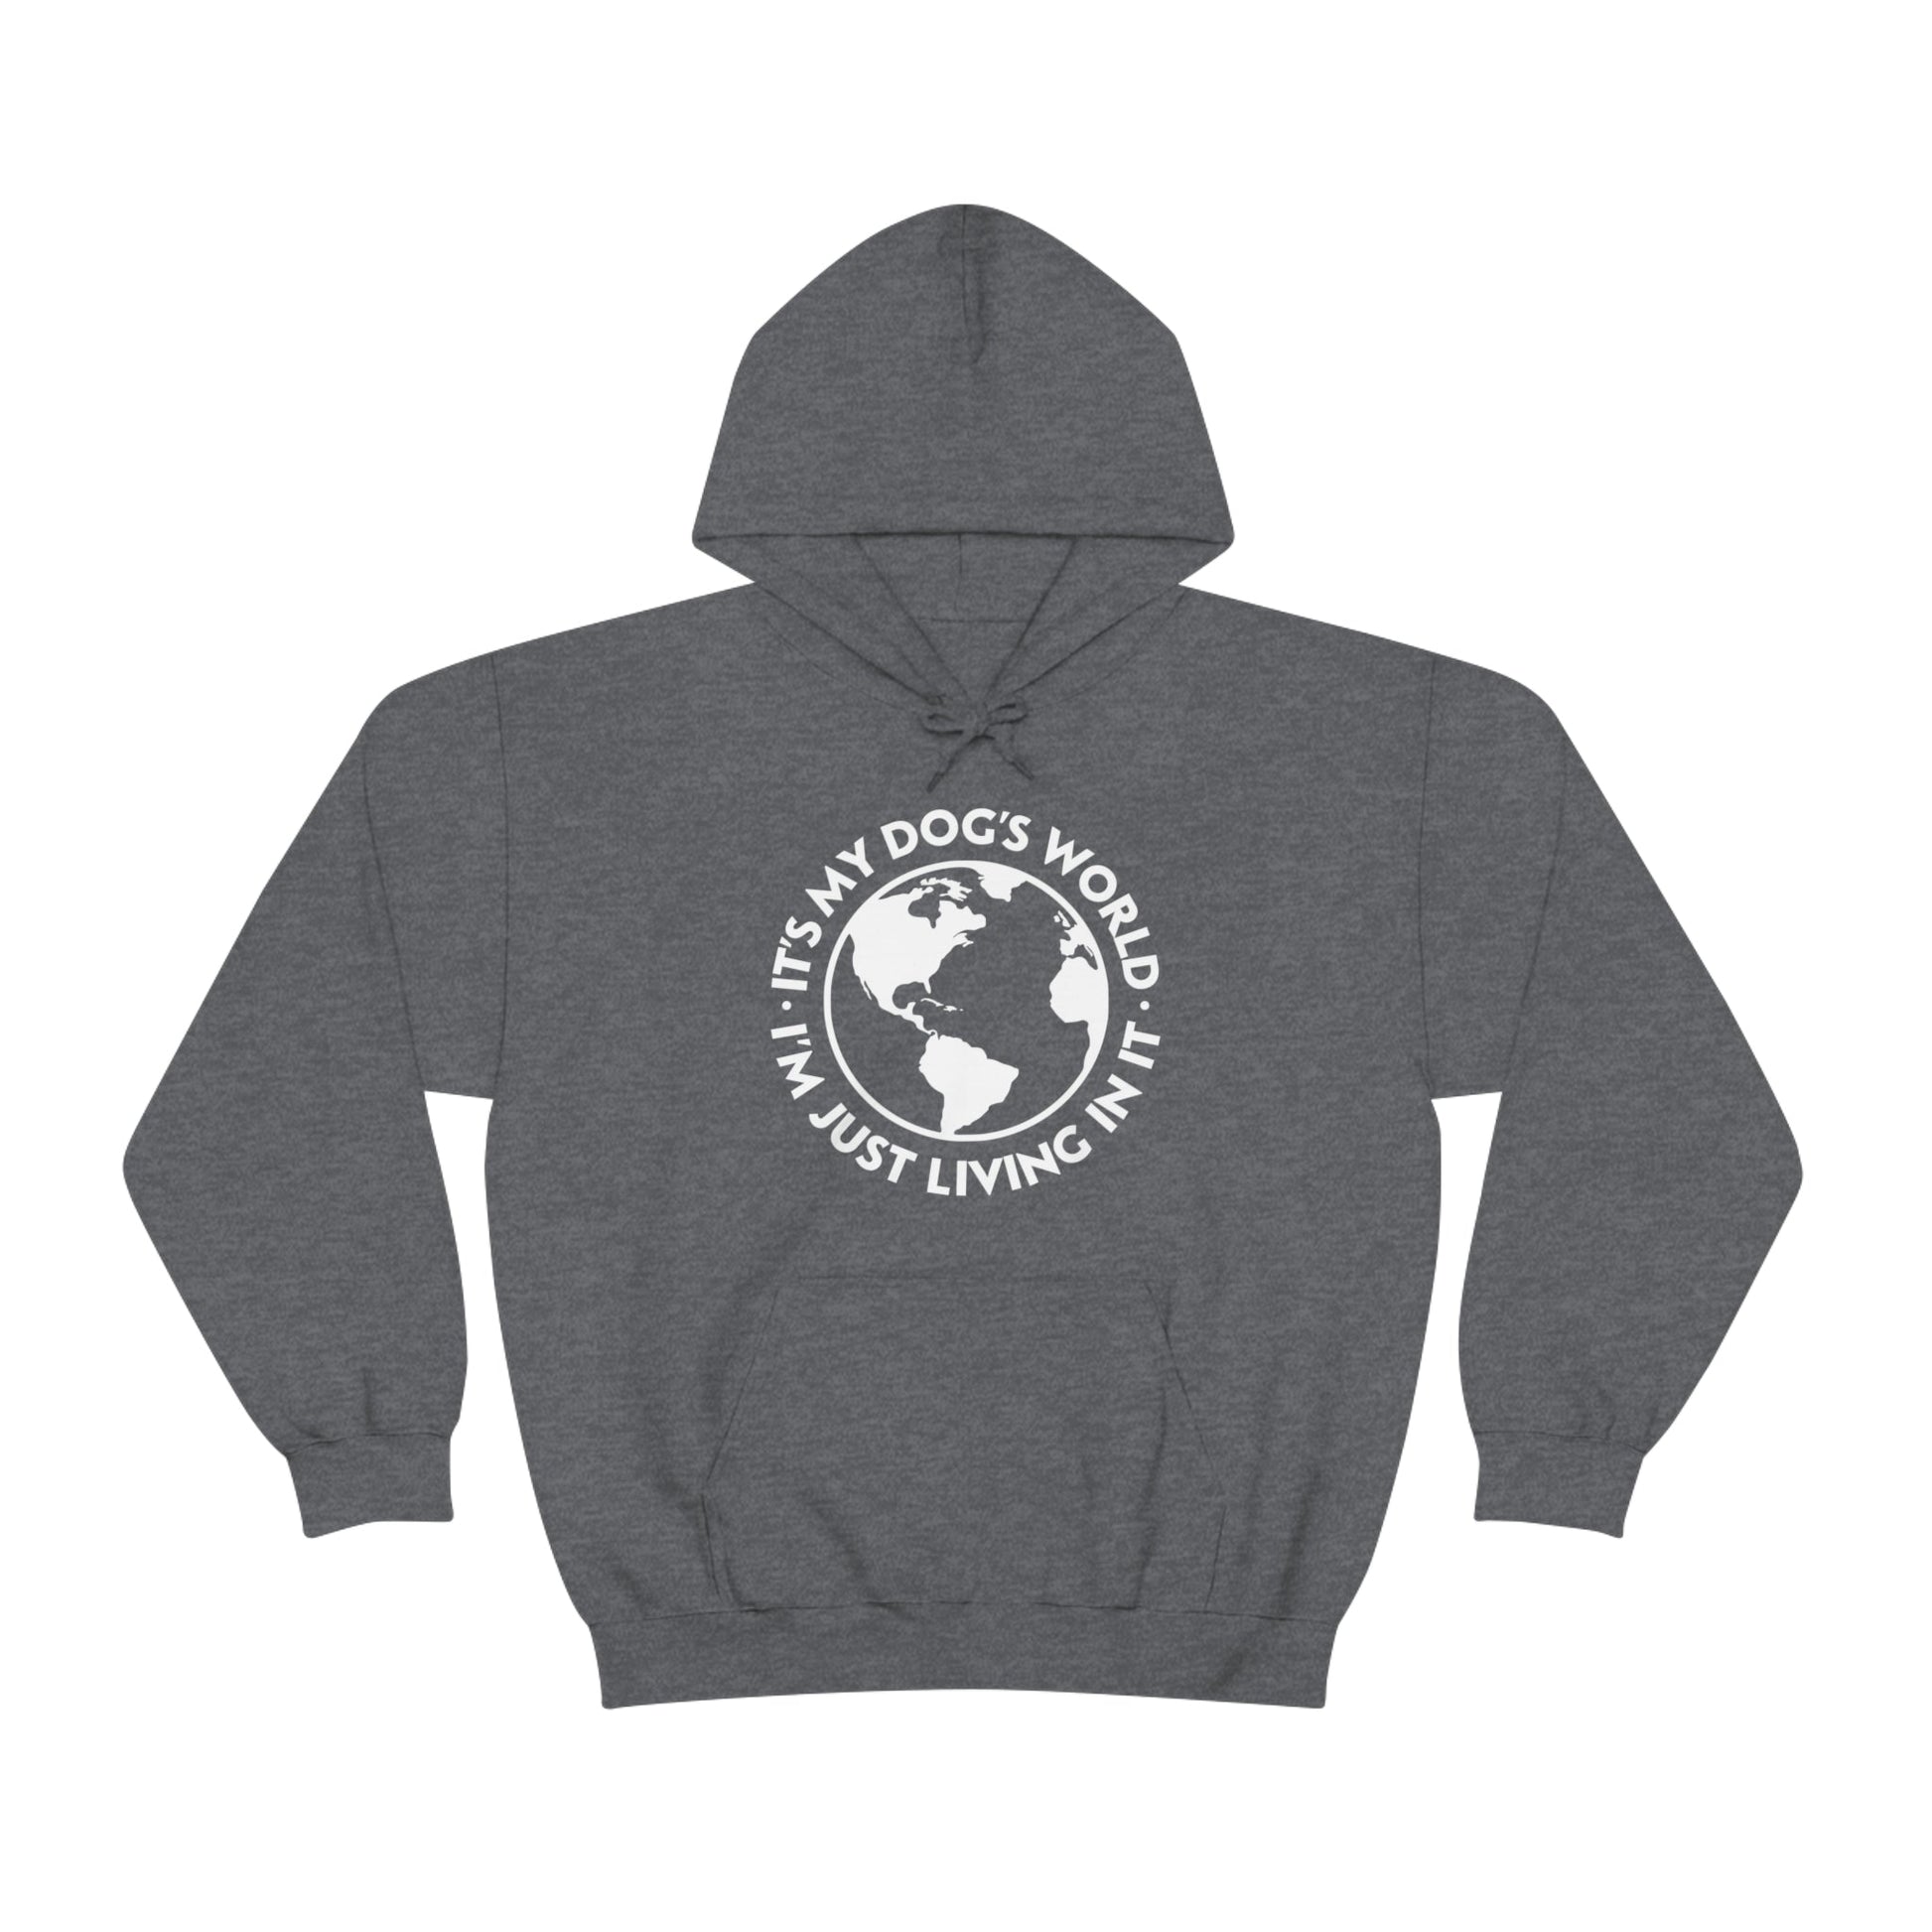 It's My Dog's World | Hooded Sweatshirt - Detezi Designs-89576840942515730607